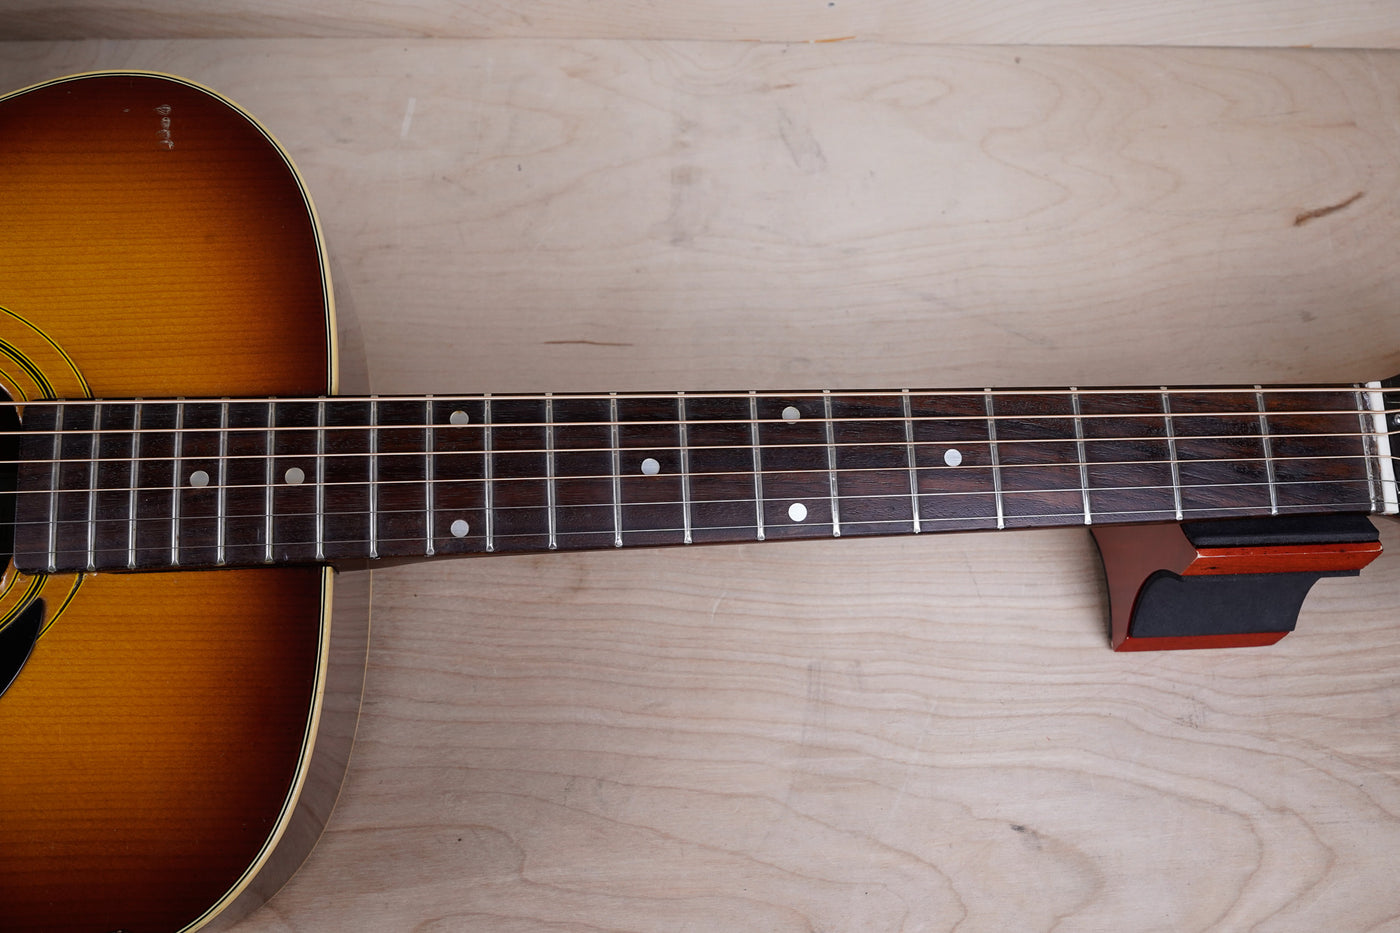 Epiphone Caballero FT-130SB MIJ Acoustic Guitar 1970s Sunburst Vintage Made in Japan Norlin Era w/ Case